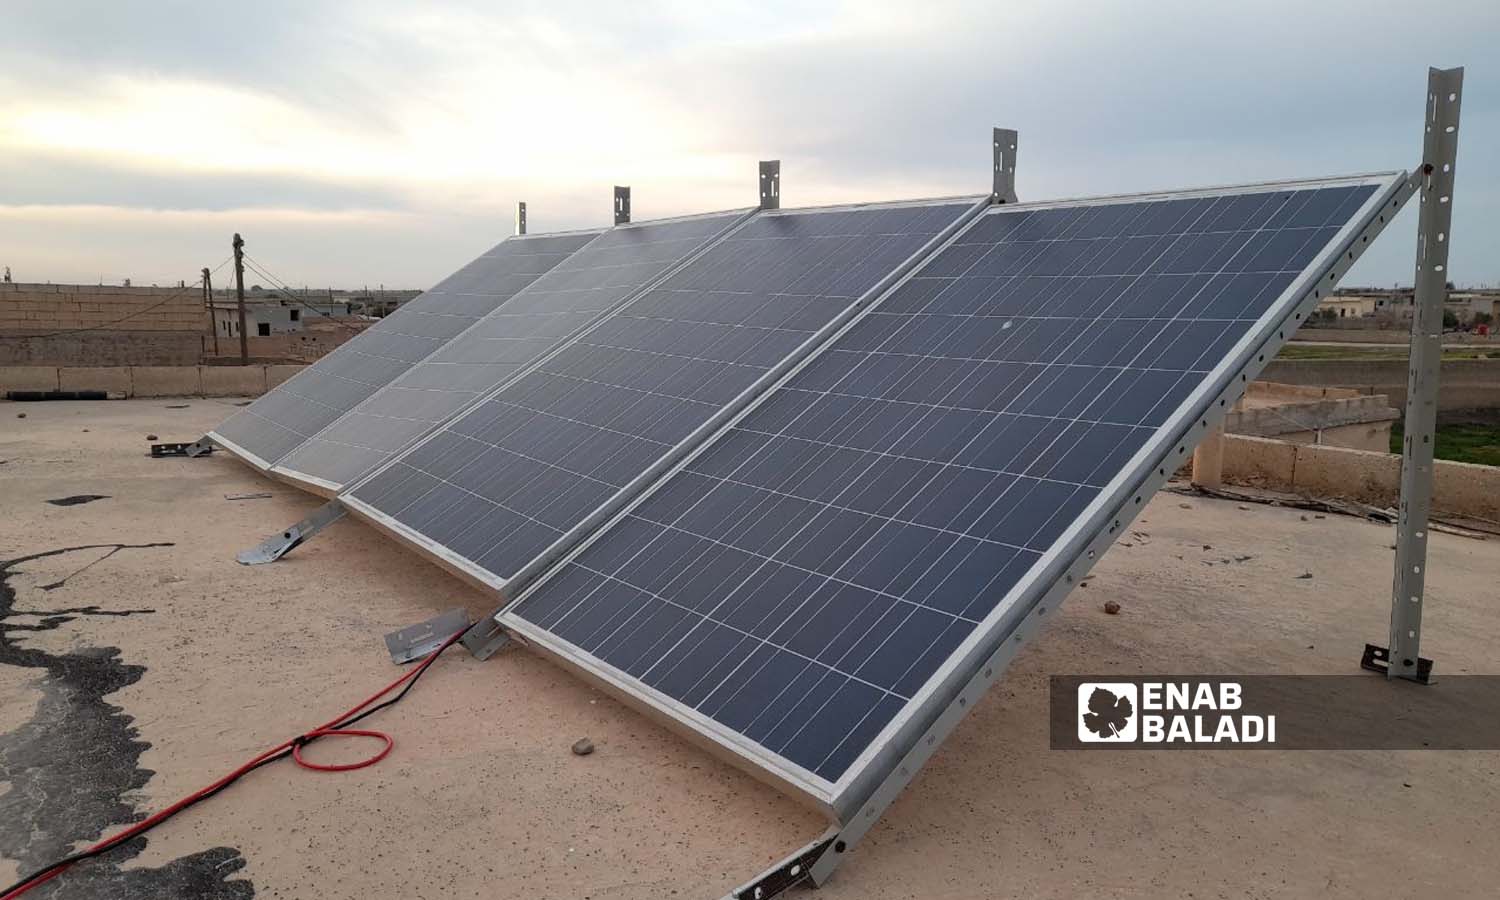 Solar panels on a house roof in Raqqa city - 28 March 2022 (Enab Baladi/Hussam al-Omar)